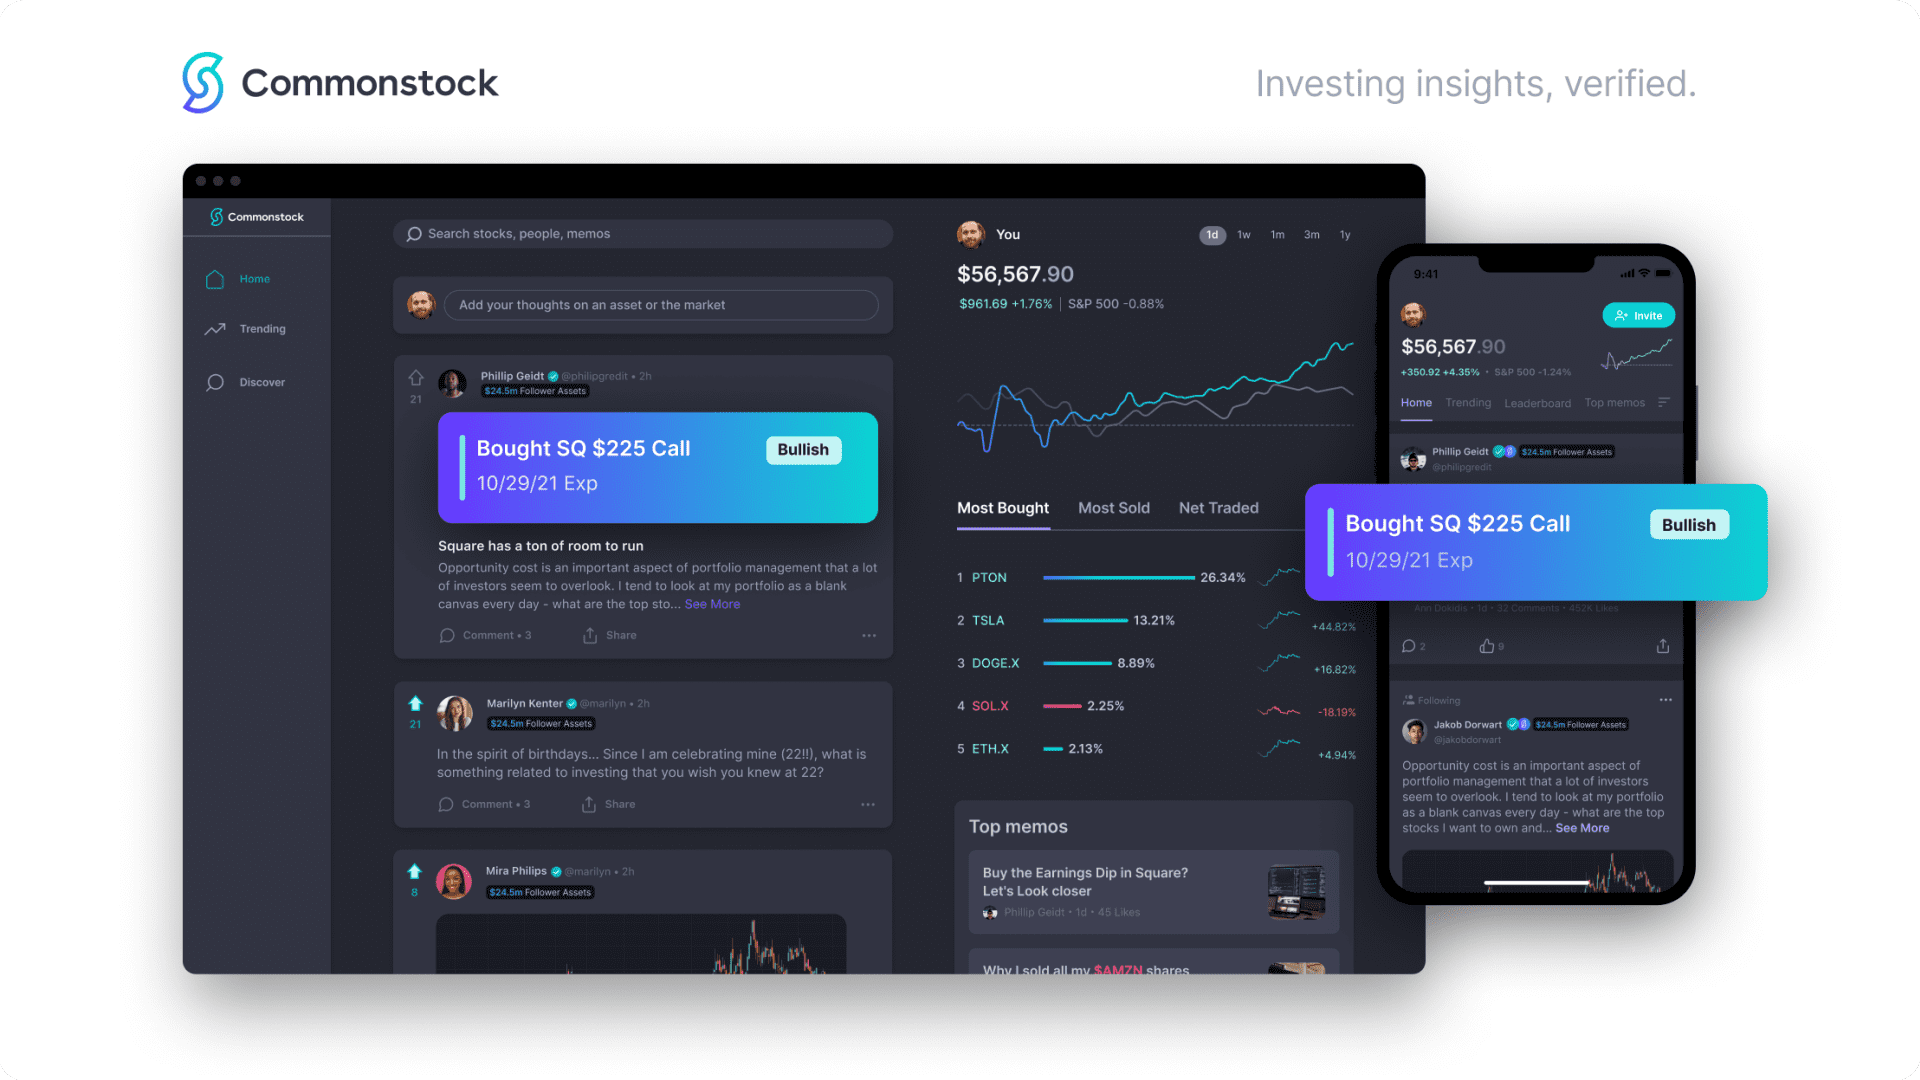 Commonstock's social media interface